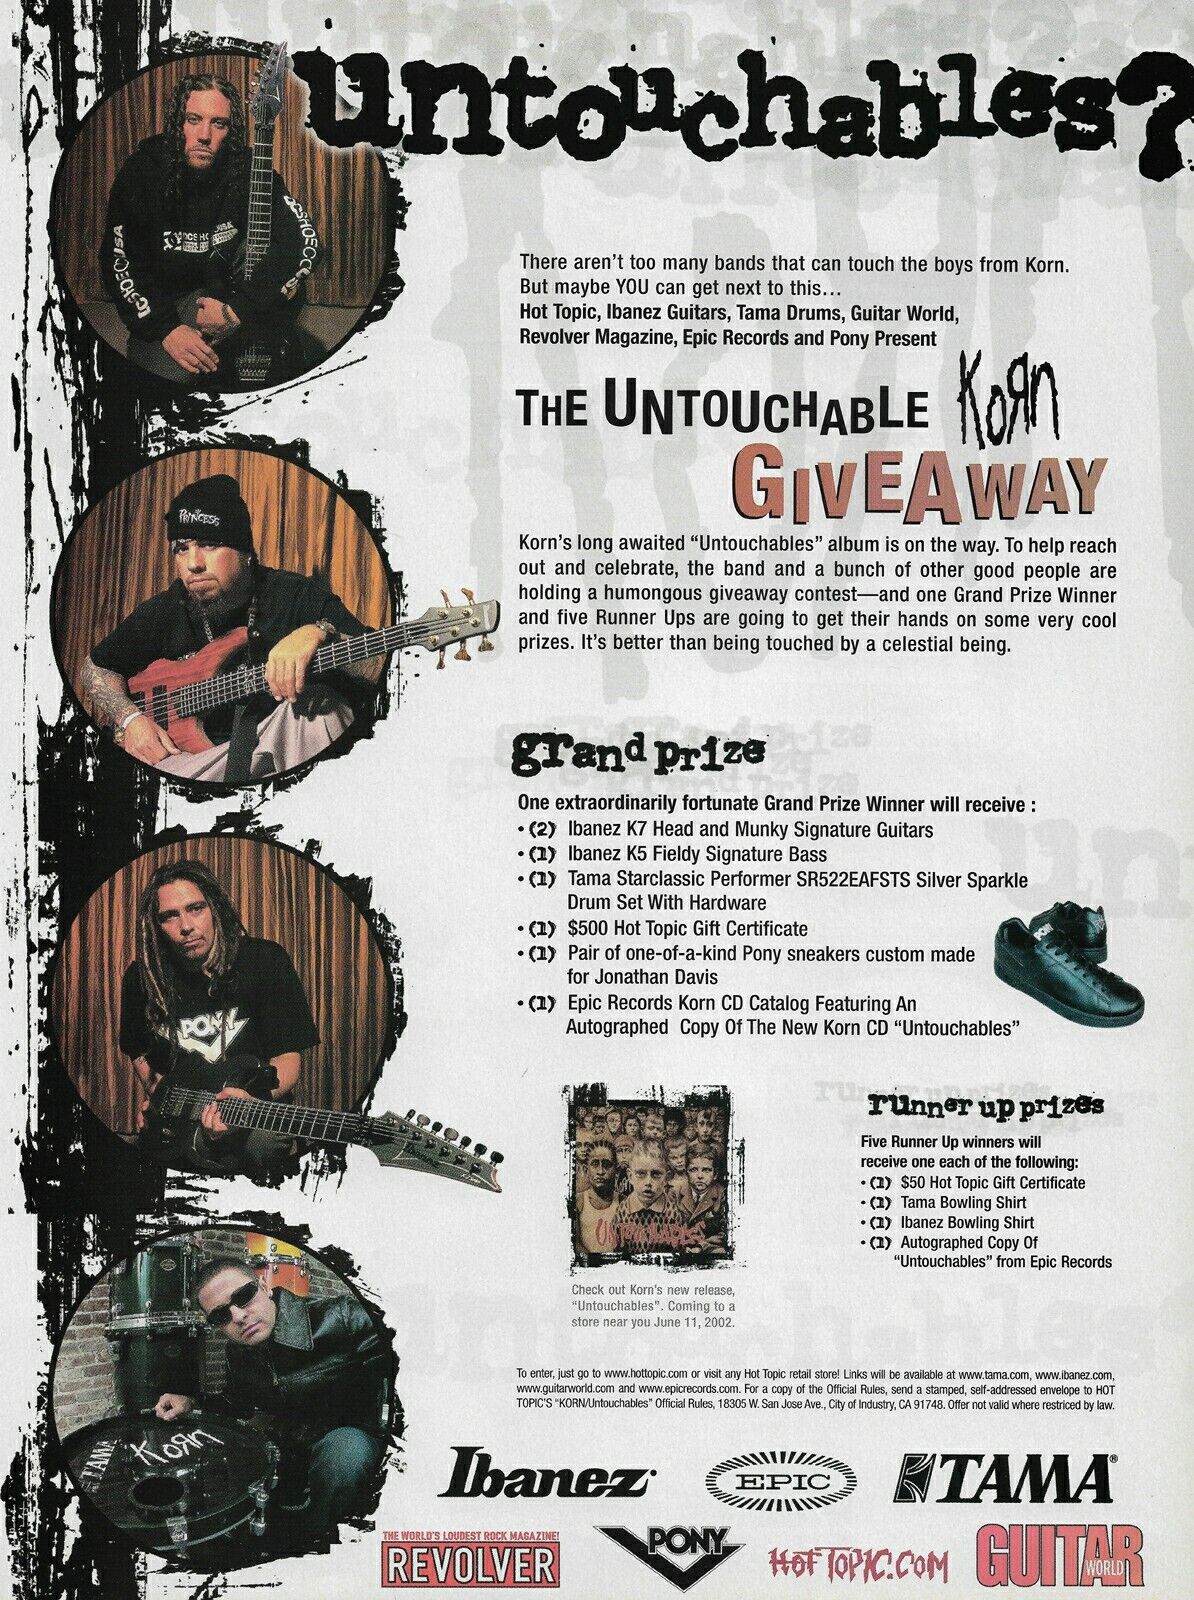 Korn Untouchables Giveaway Contest 2002 Promo Ad 8x11 Mini Poster